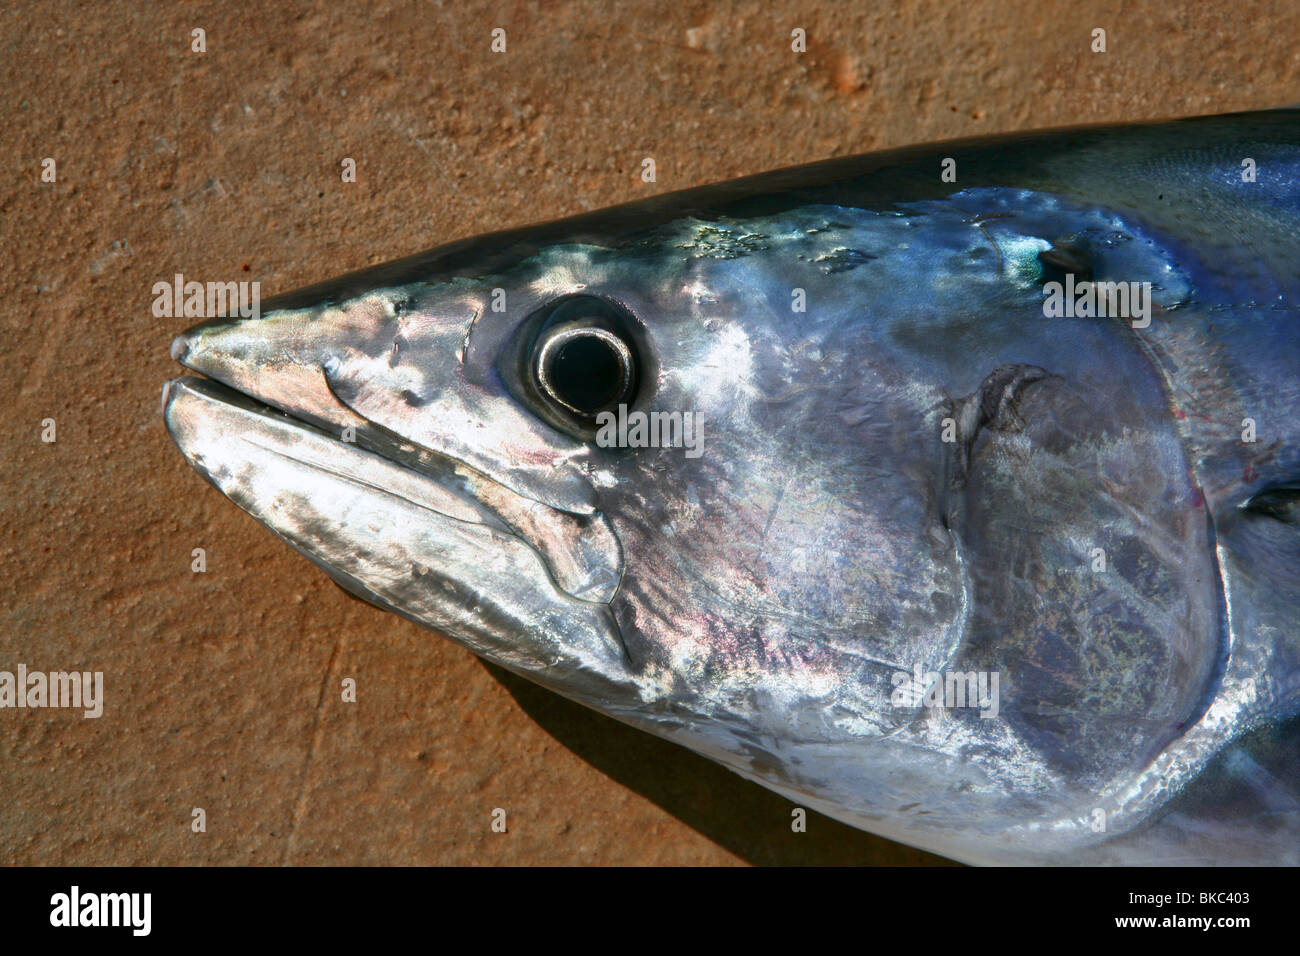 Bonito, skipjack tuna, Sarda Sarda, close up face portrait macro Stock Photo